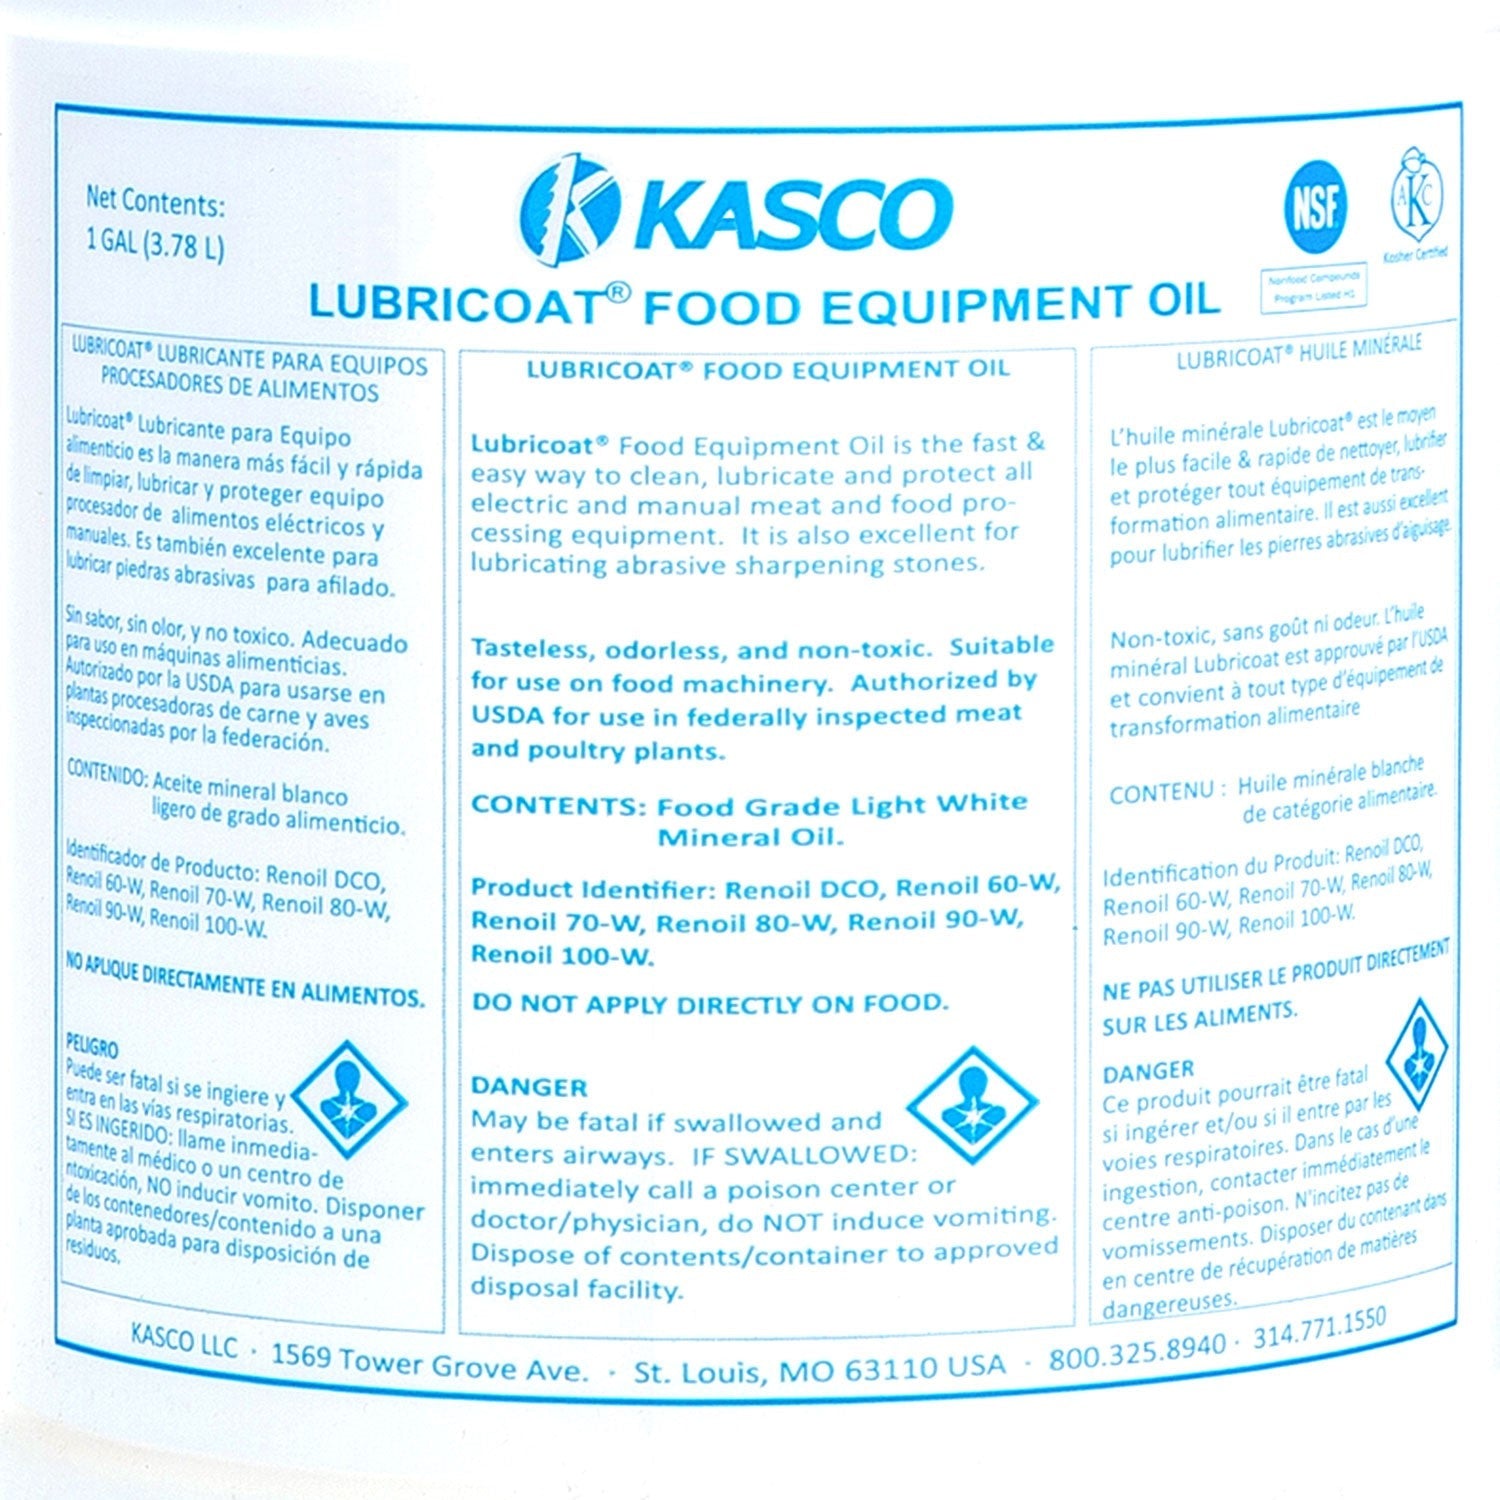 Lubricoat Oil Food Safe Lubricant, 4 - 1 Gallon Bottles per Case